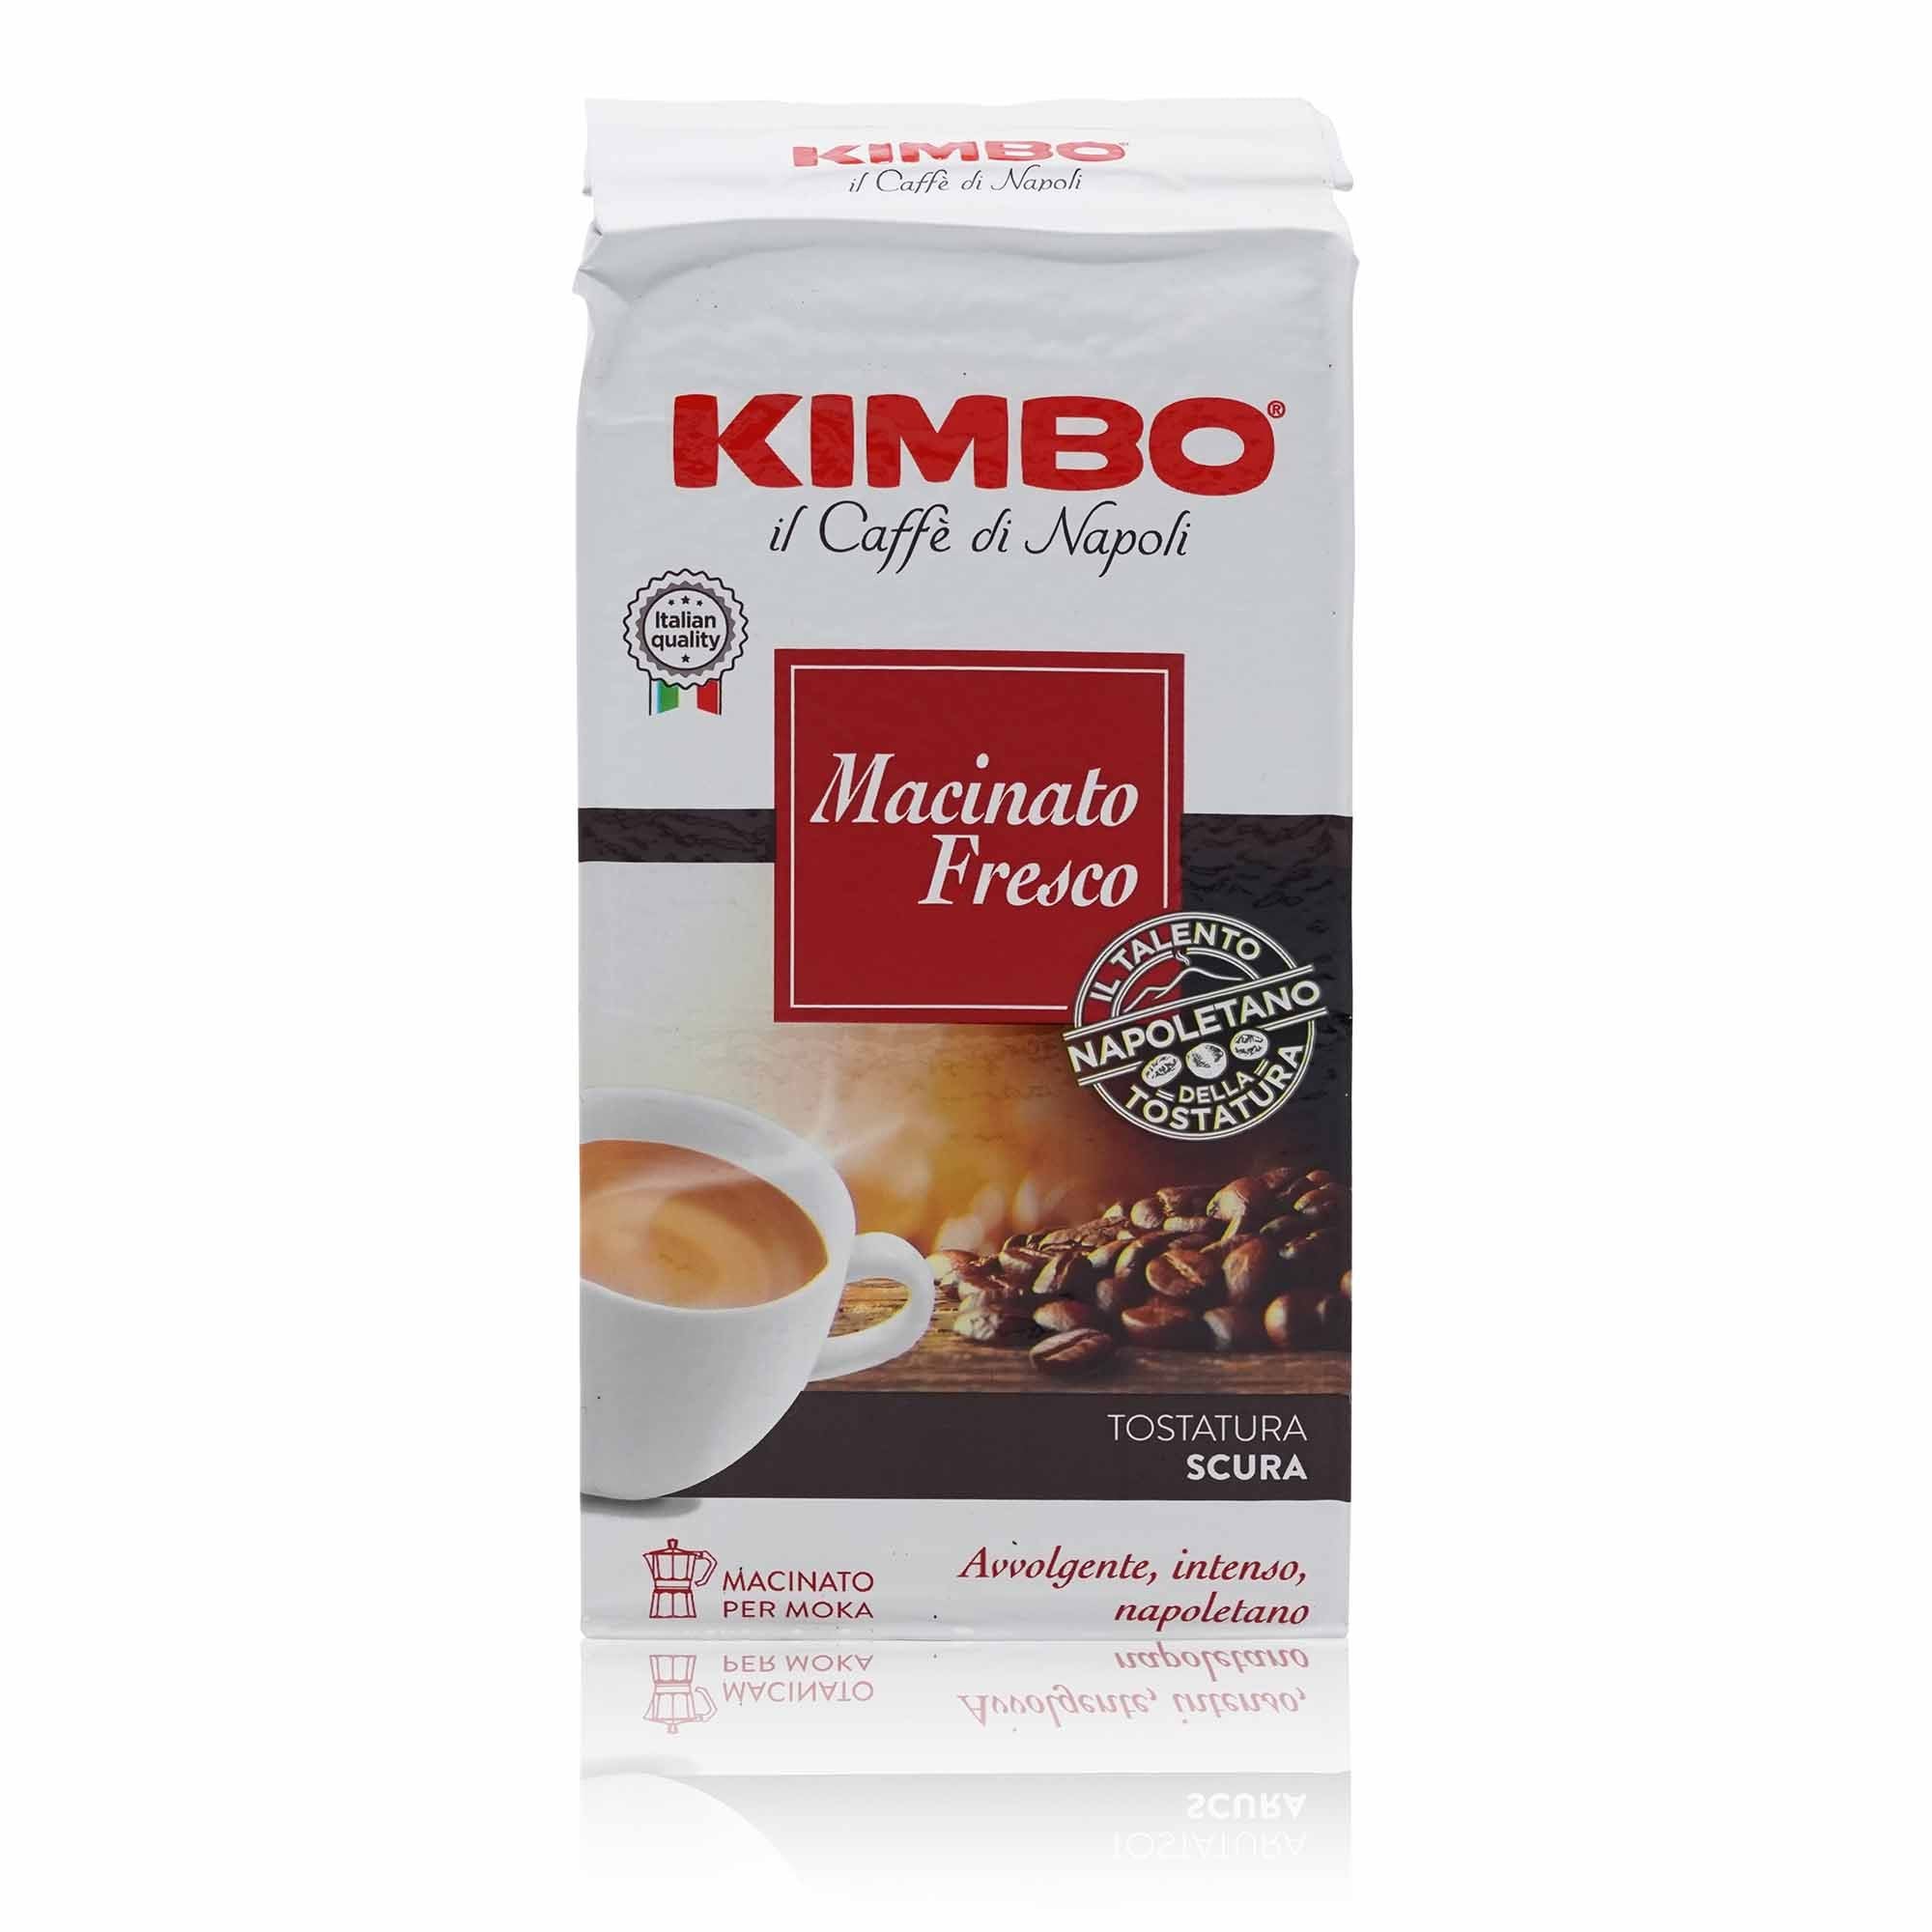 KIMBO Caffè Macinato Fresco napoletano – Kaffee Frisch gemahlen neapoletanisch - 0,250kg